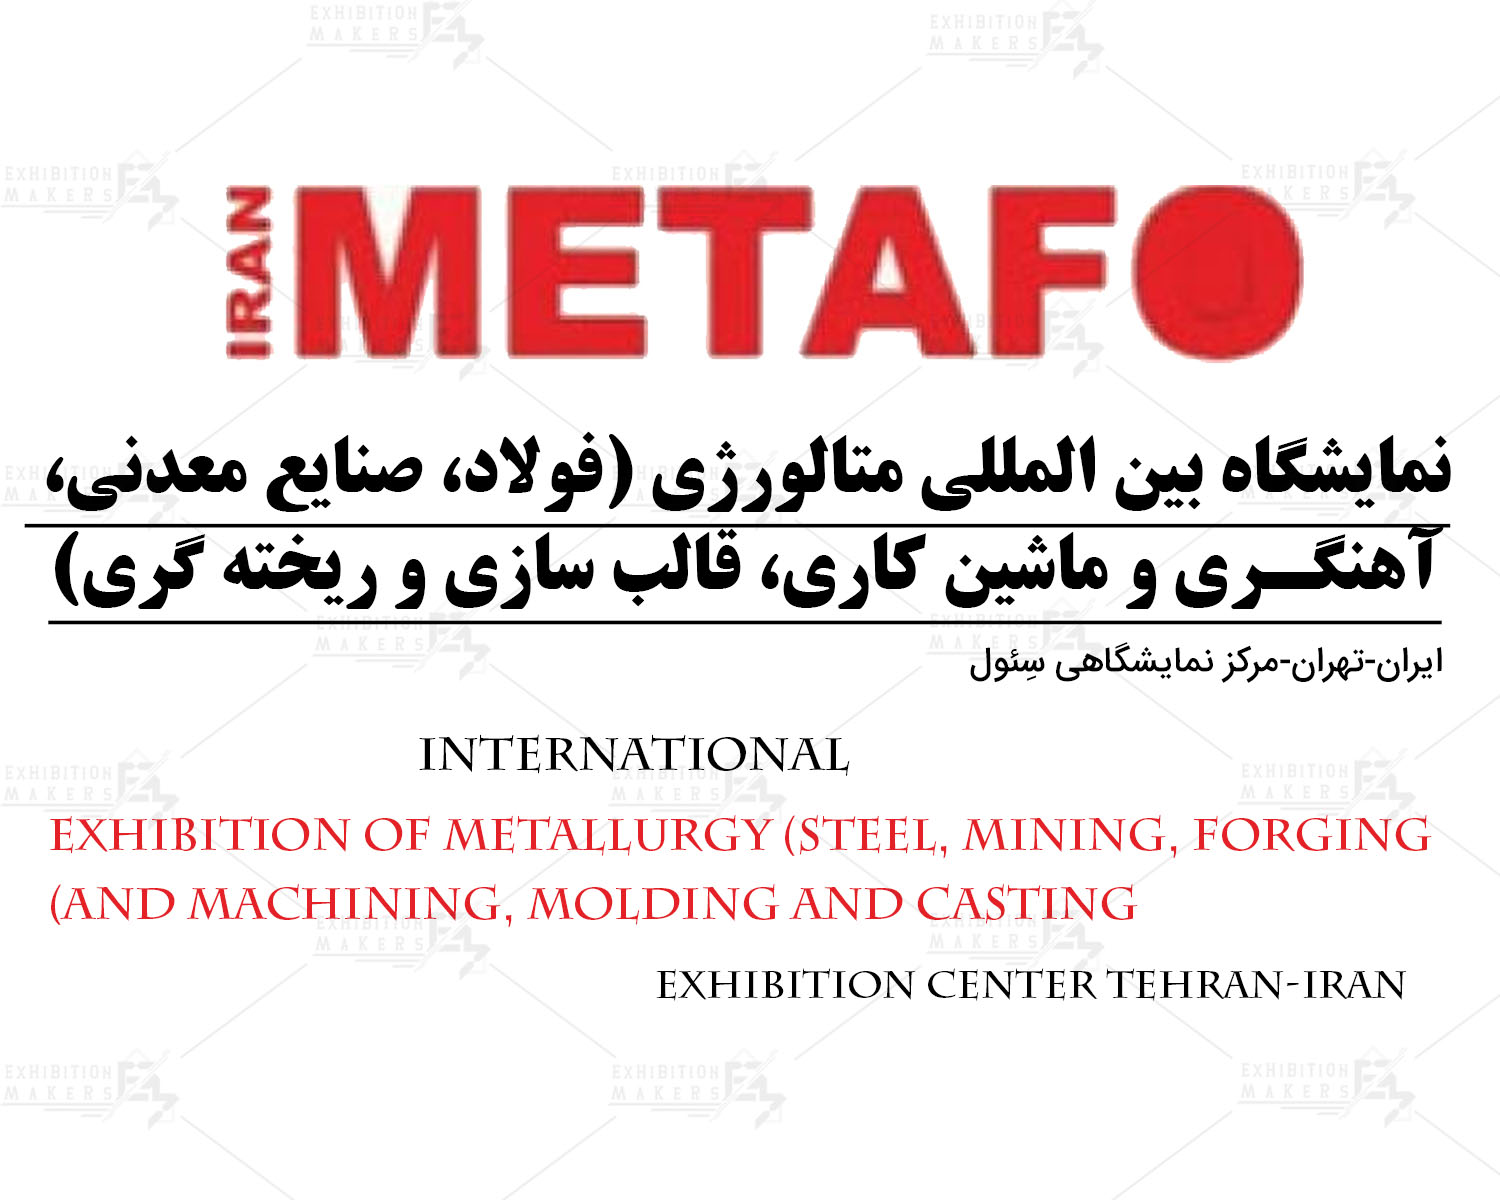 International Exhibition of Metallurgy (Steel, Mining, Forging and Machining, Molding and Casting) Iran Tehran